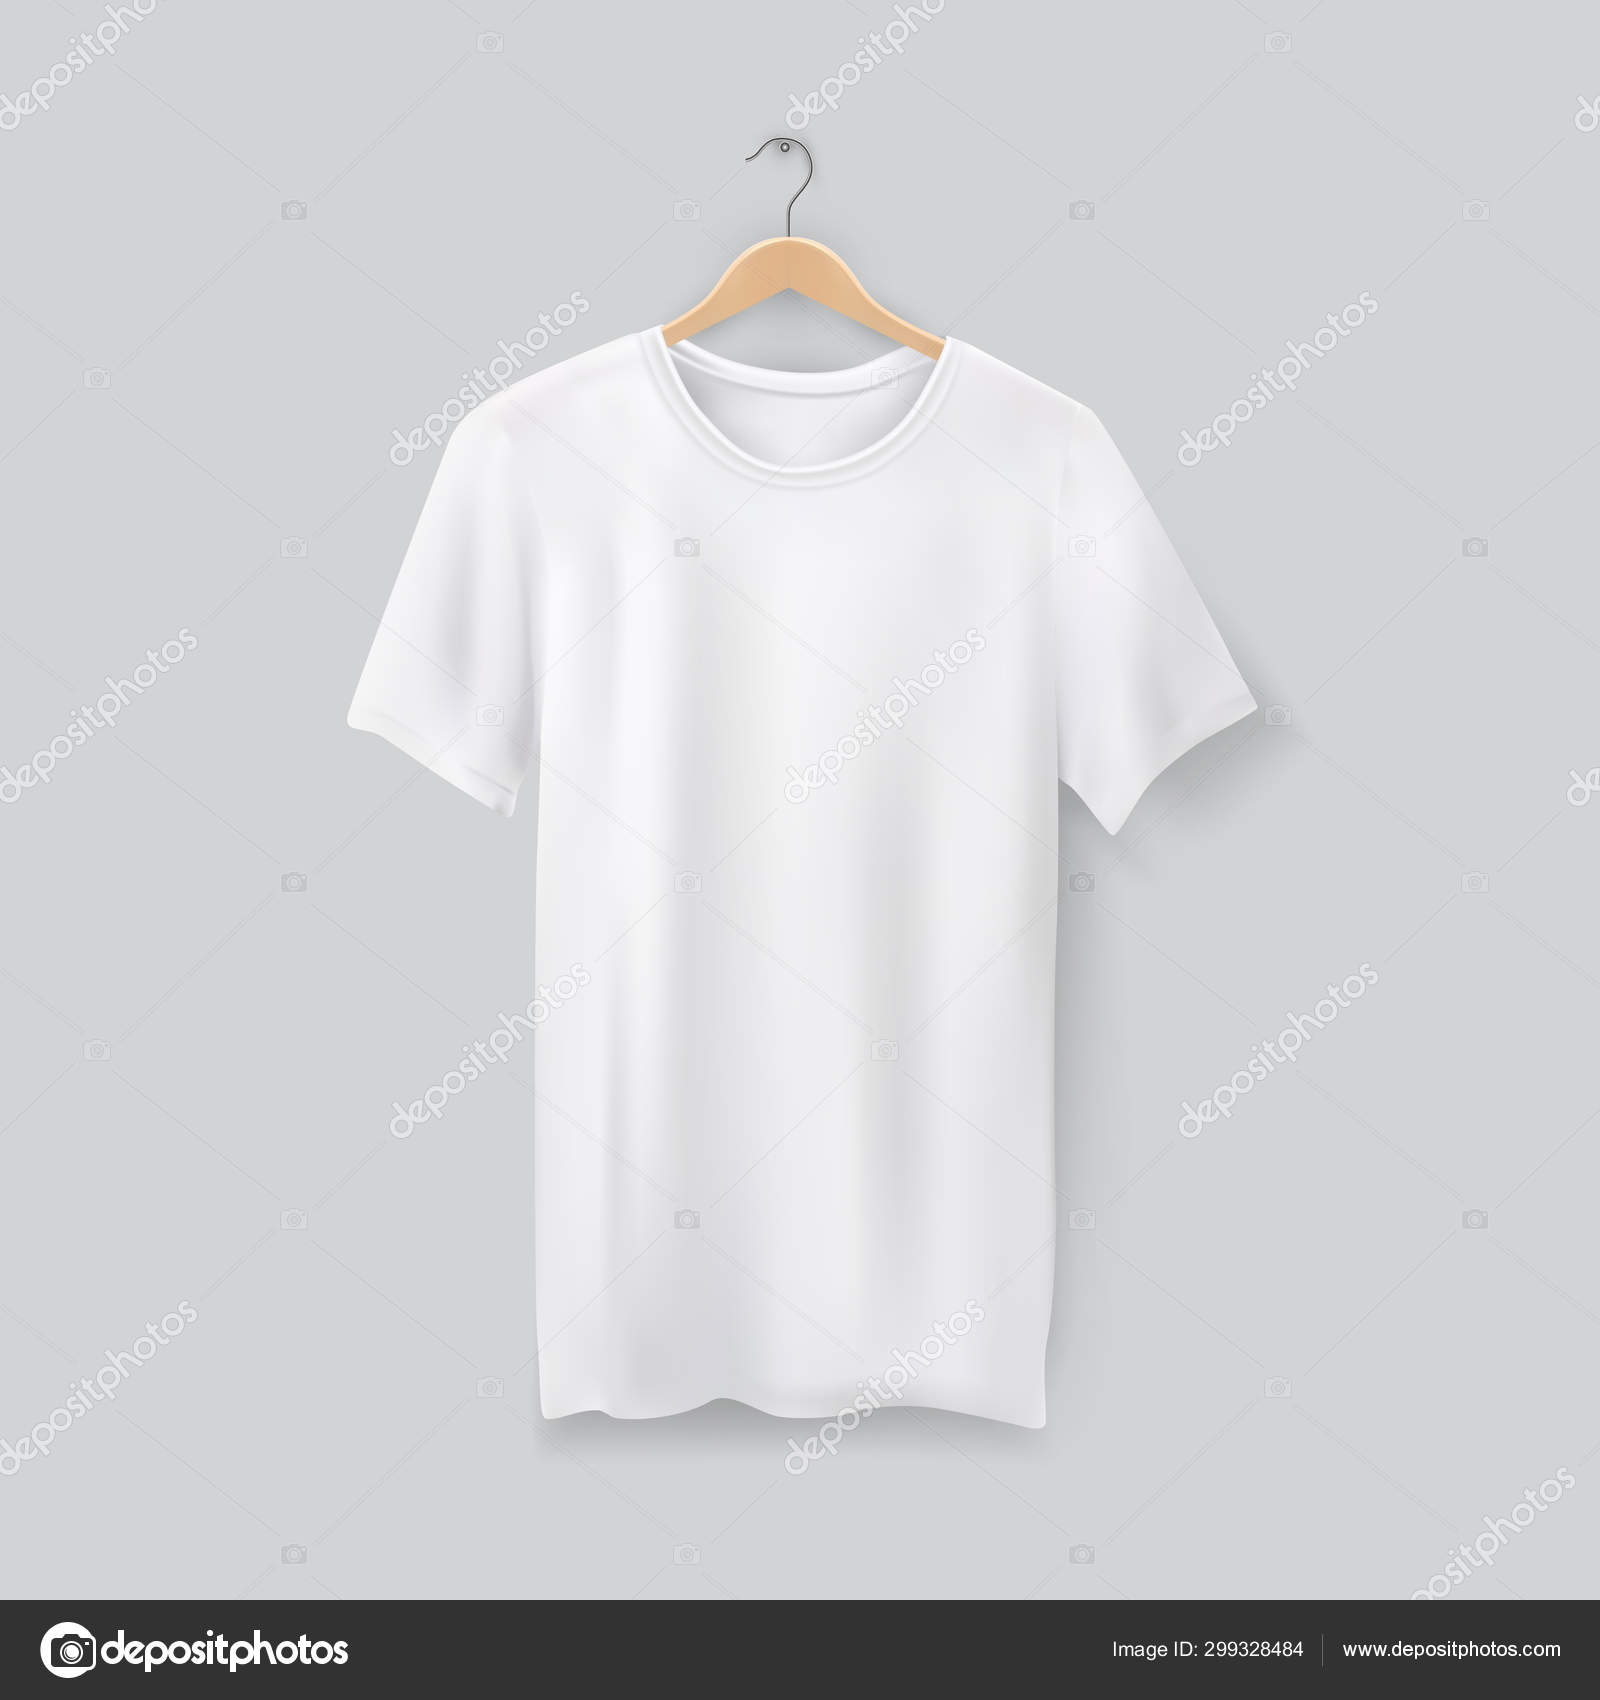 https://st4.depositphotos.com/1014627/29932/v/1600/depositphotos_299328484-stock-illustration-unisex-3d-t-shirt-on.jpg